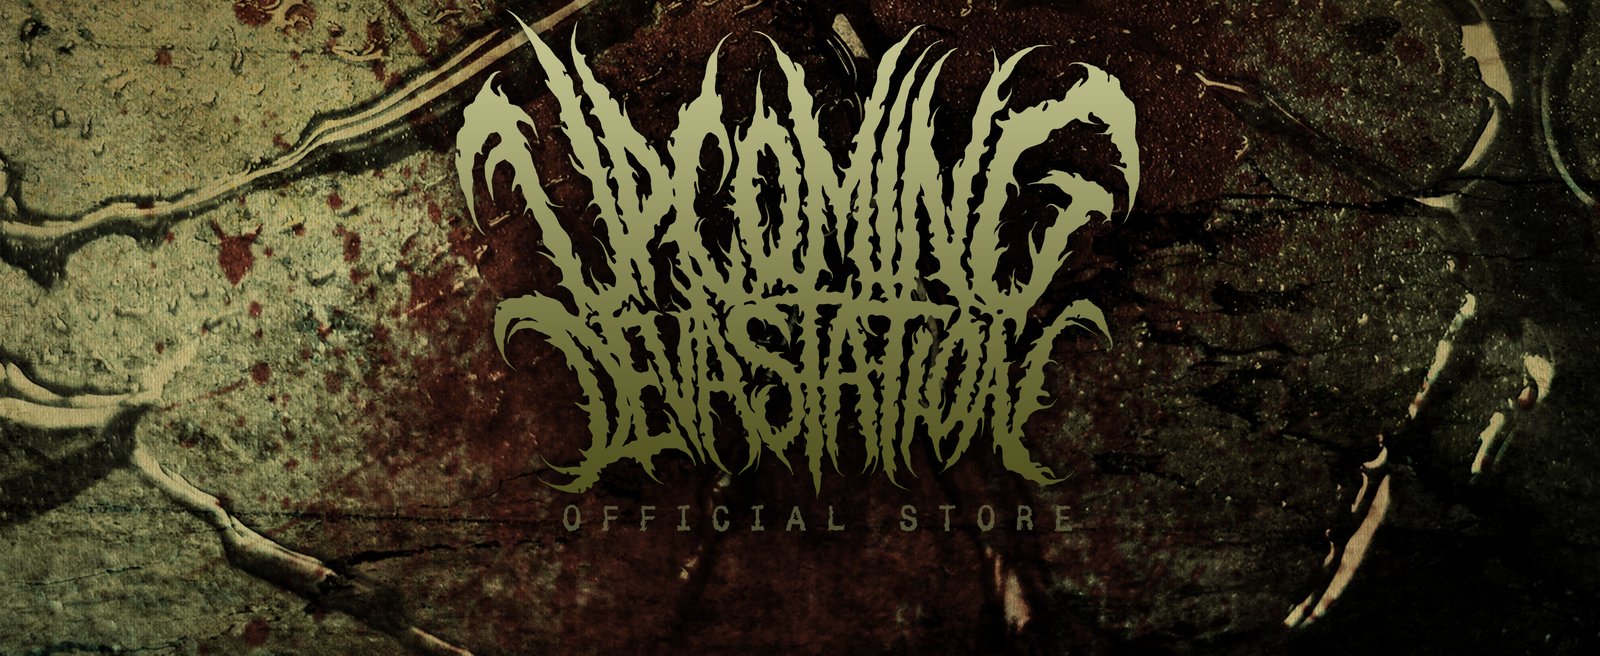 upcoming devastation official online store